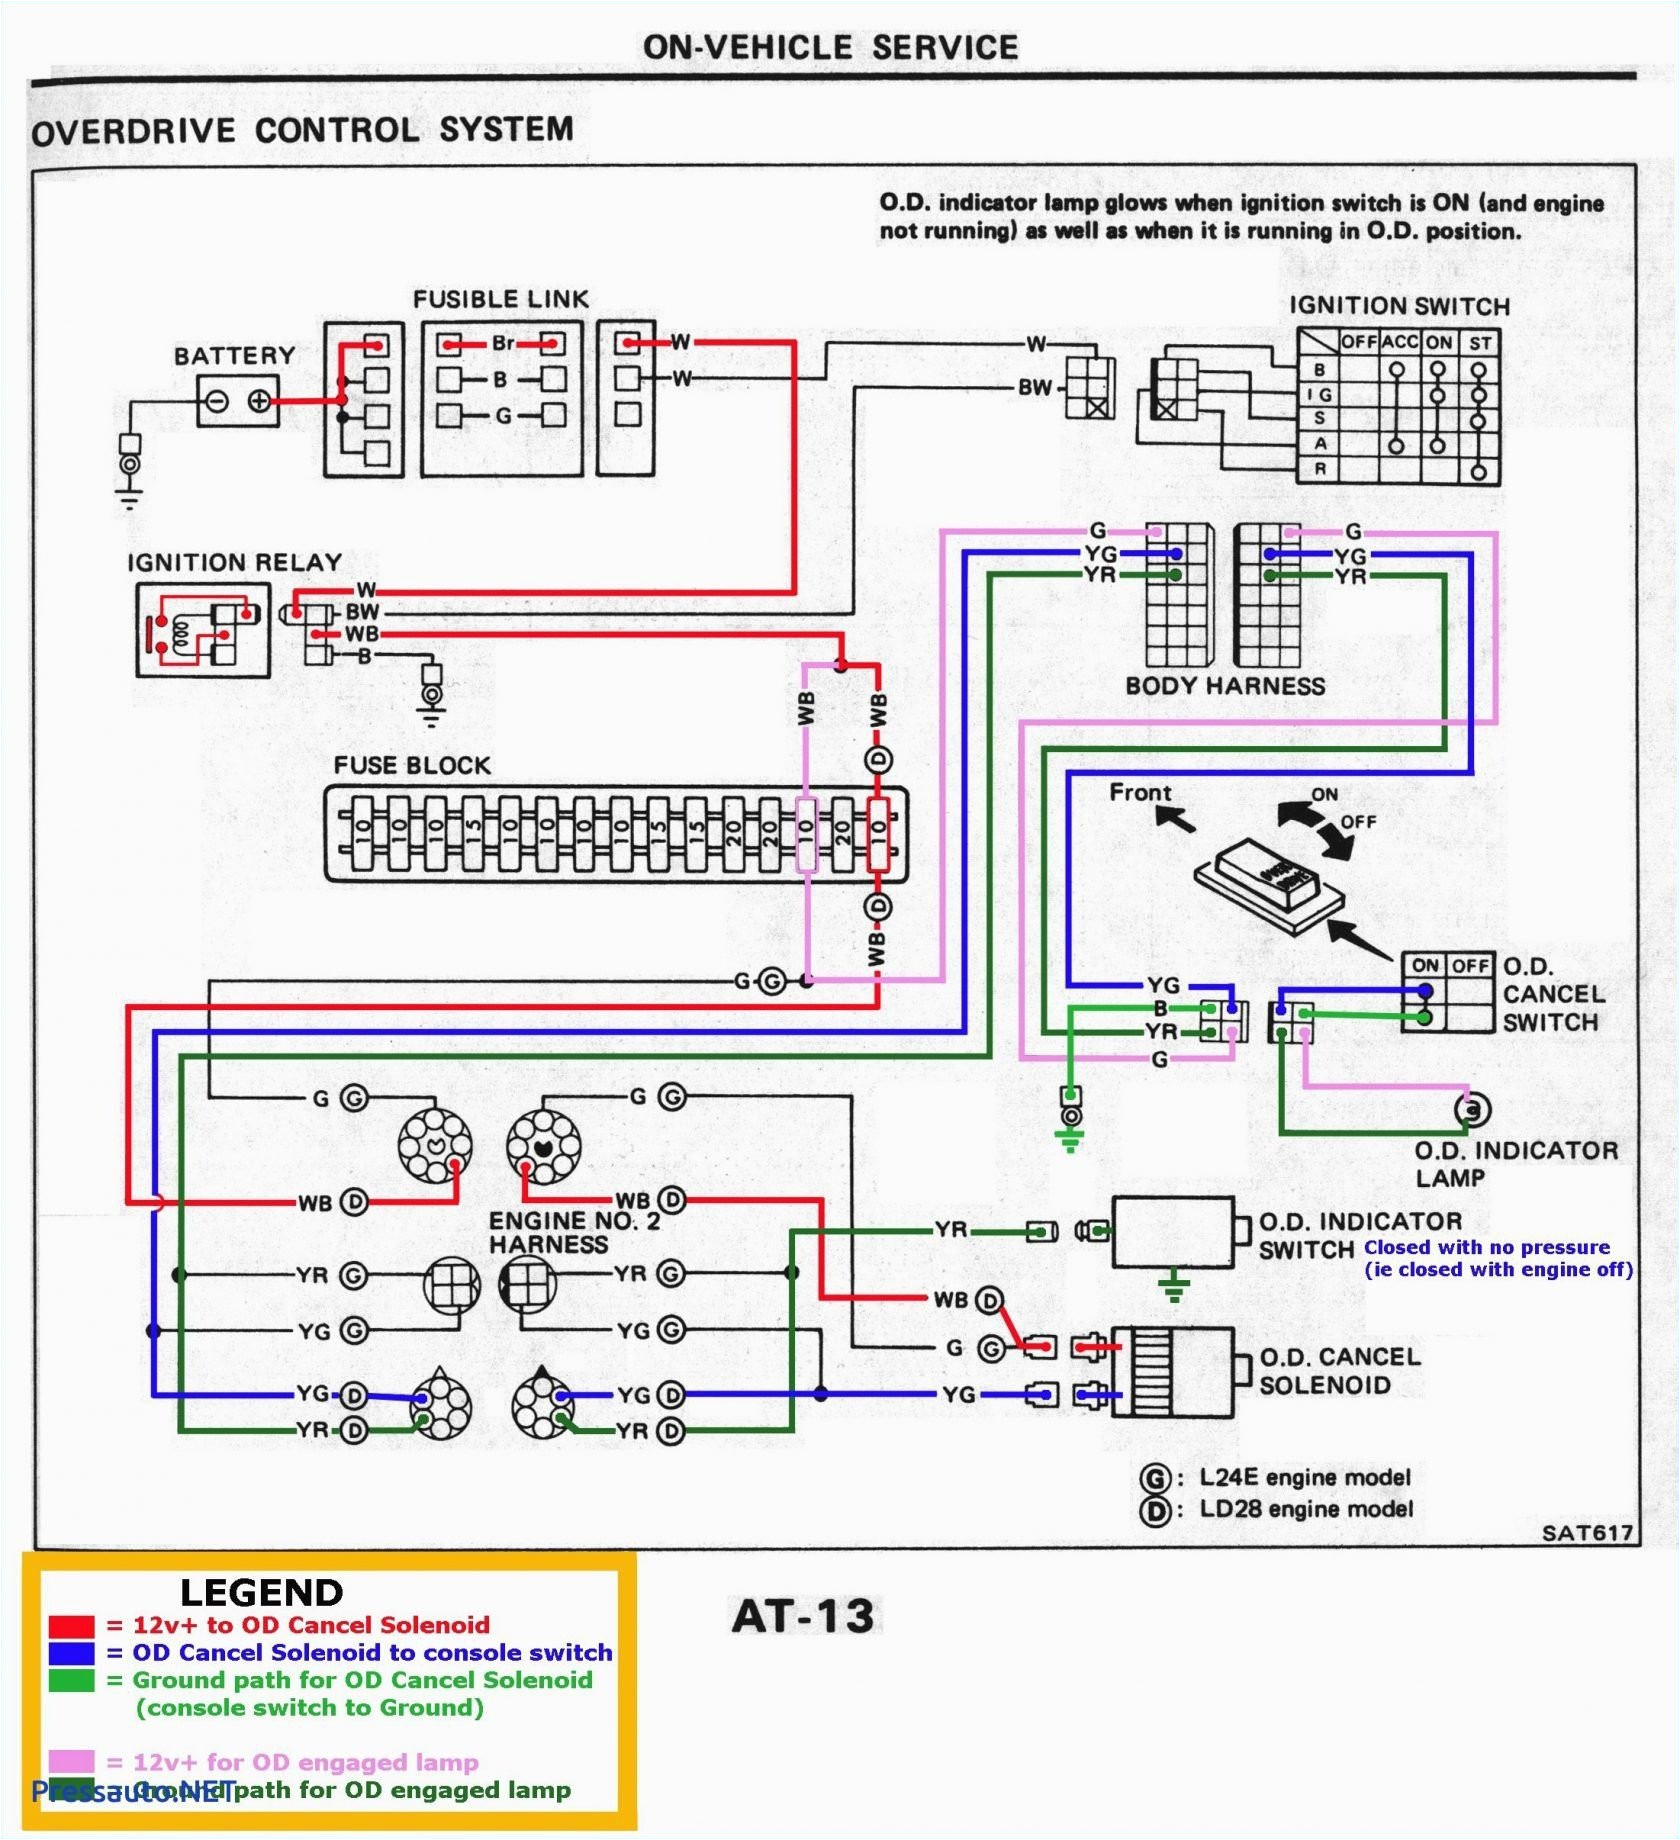 ae wiring diagram wiring diagram toolbox a wiring diagram for a ponatic 2 8 v6 motor ae wiring diagram